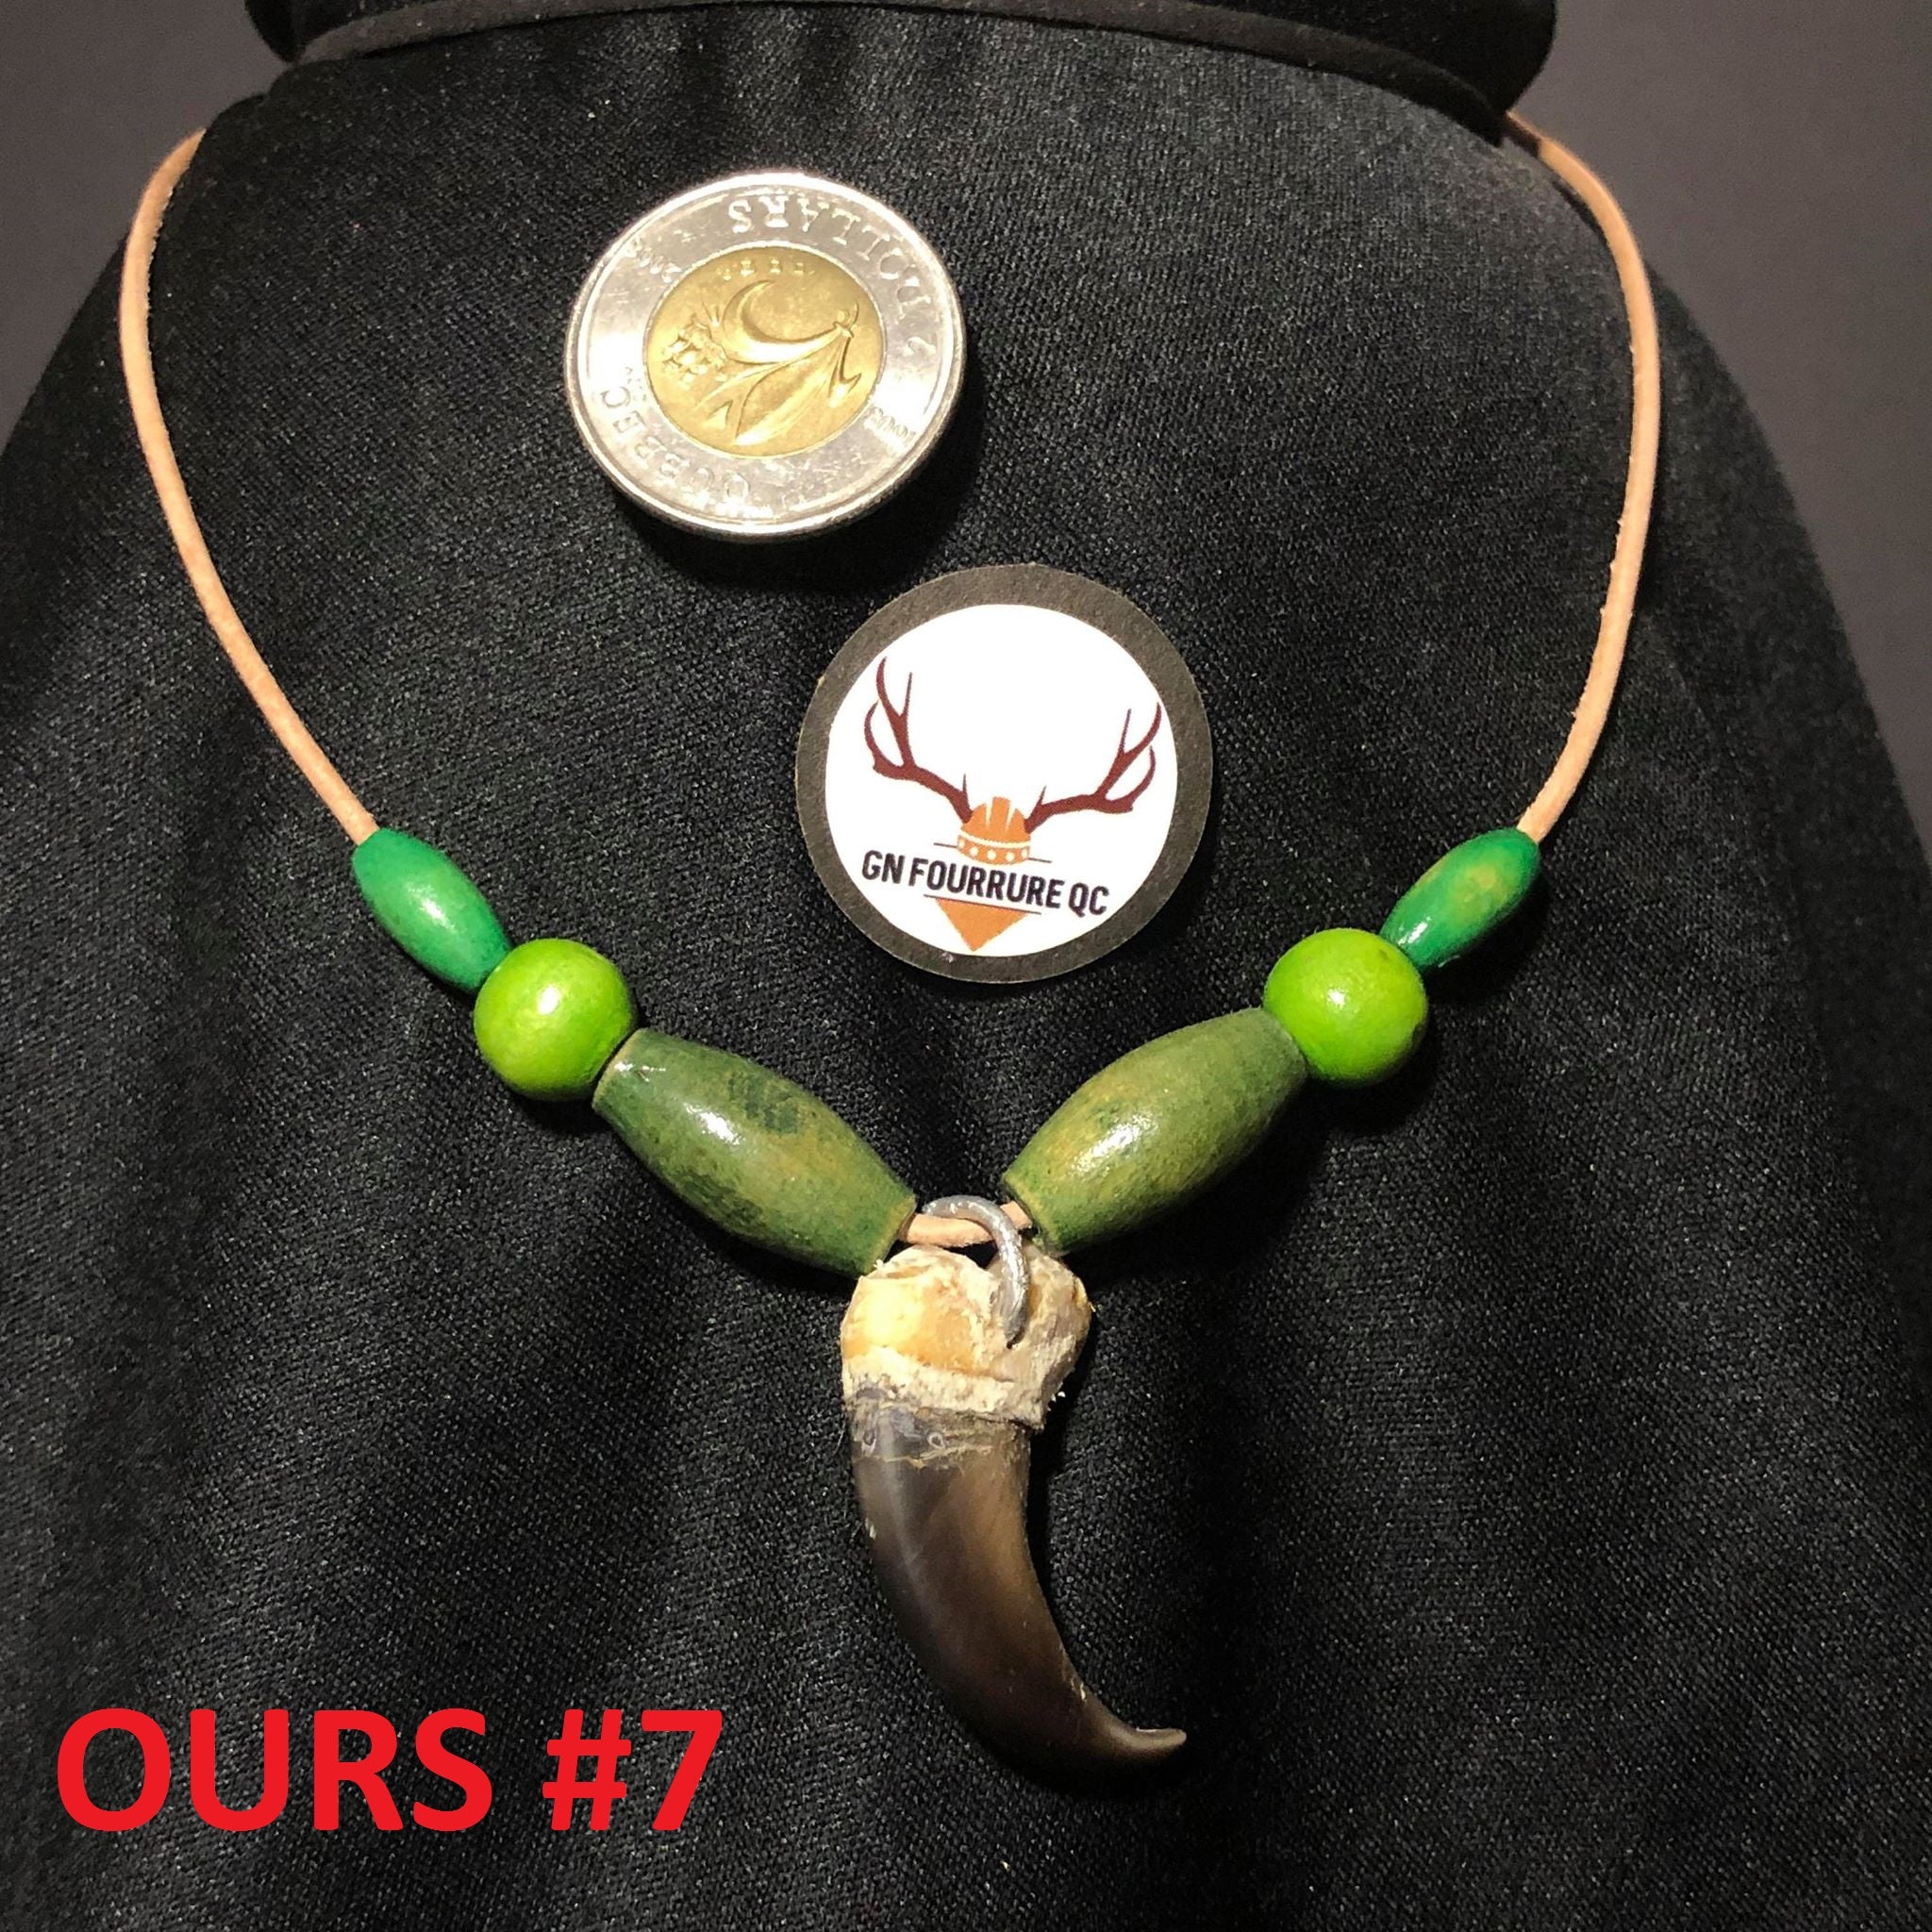 Imitation) Bear Claw necklace I made for my regalia : r/NativeAmerican